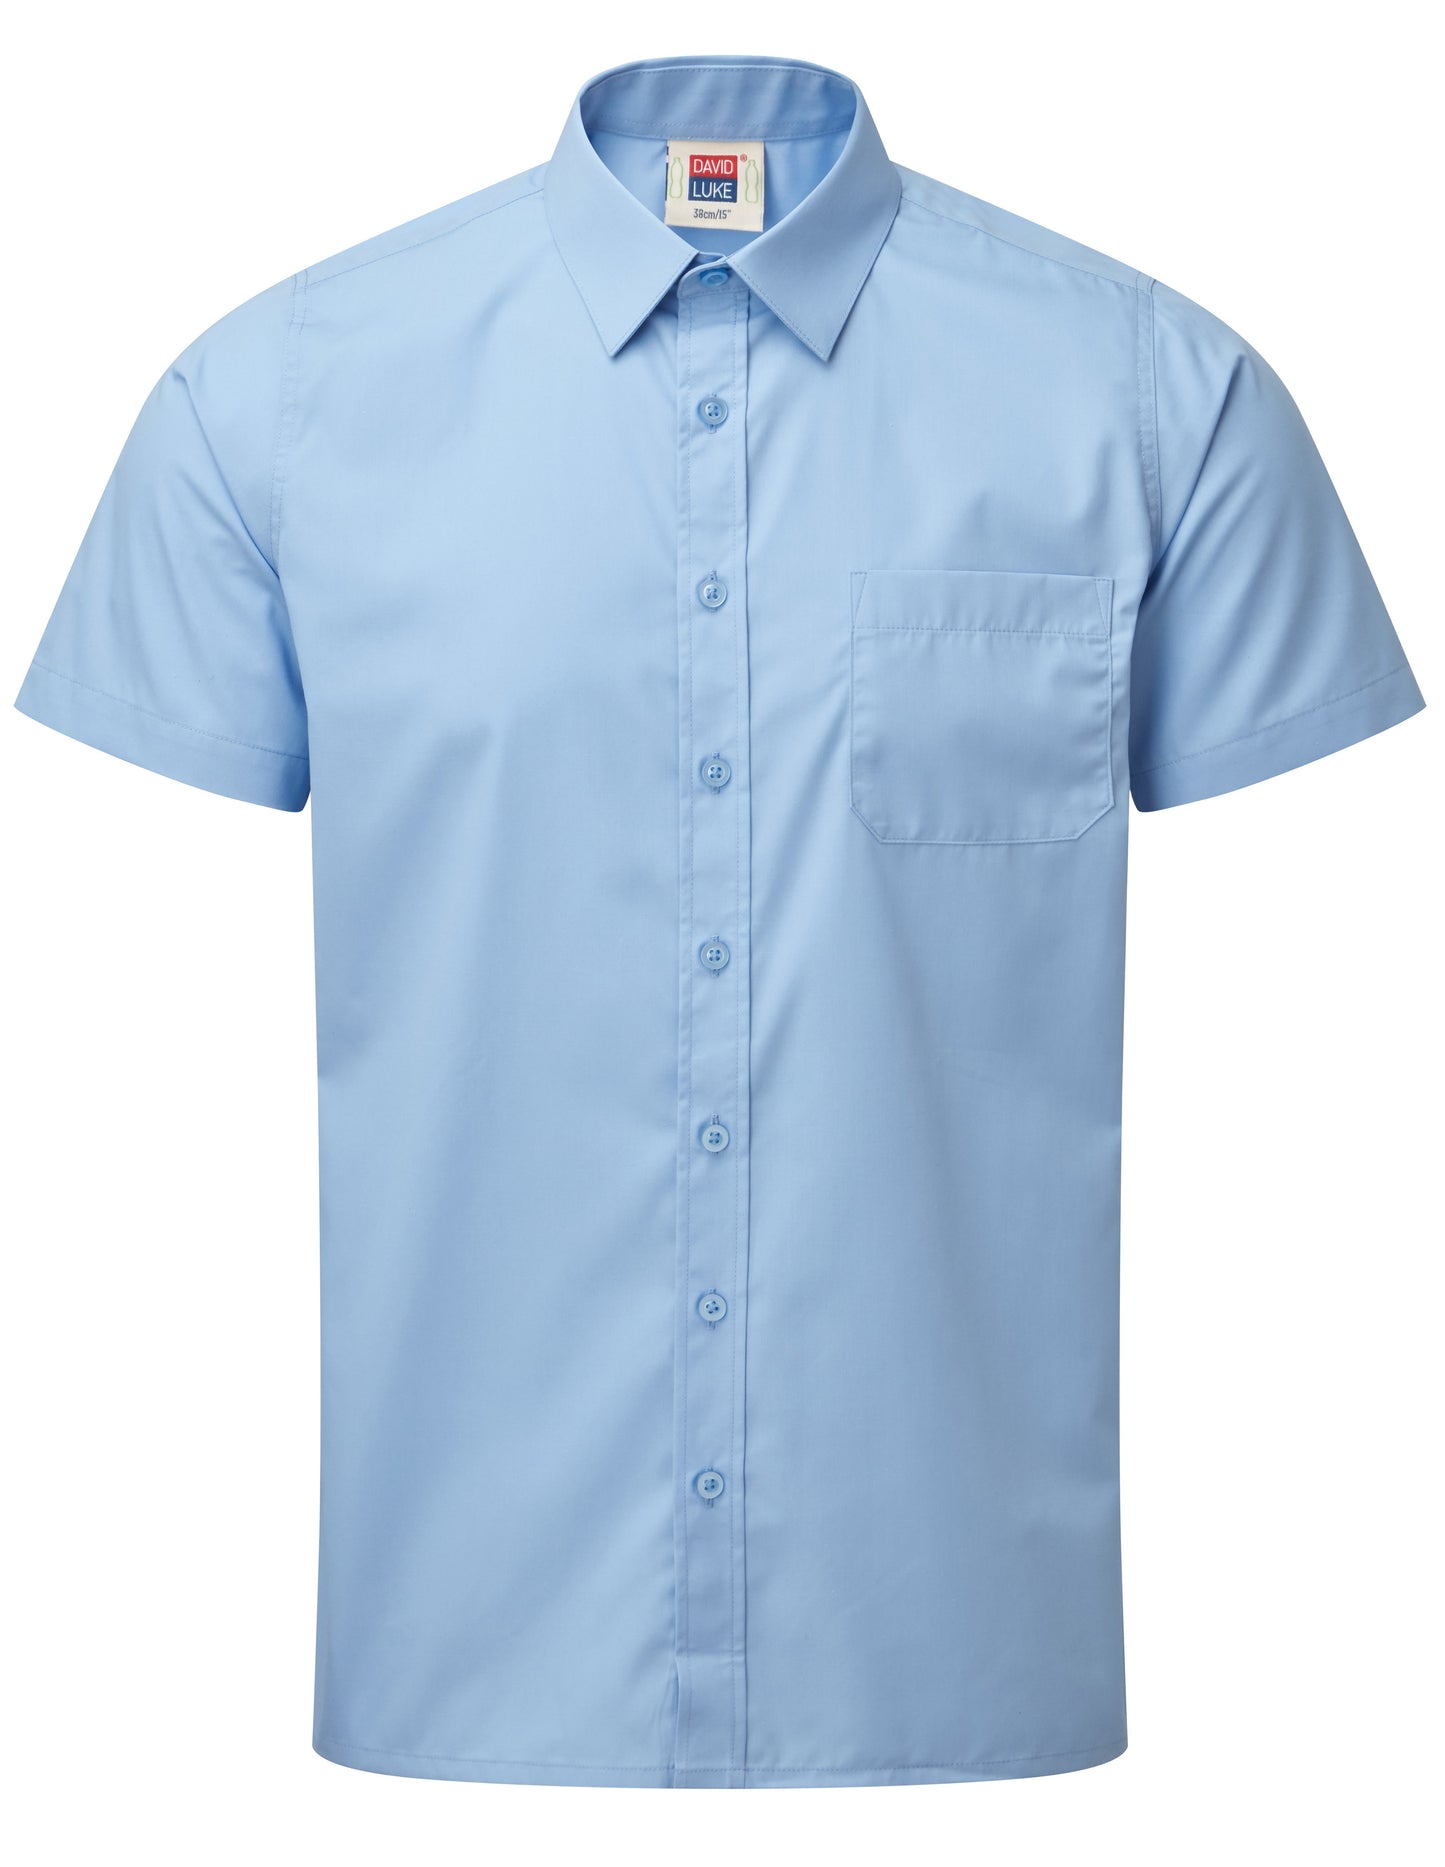 Blue - Boys' Short Sleeve Shirt (Twin Pack)